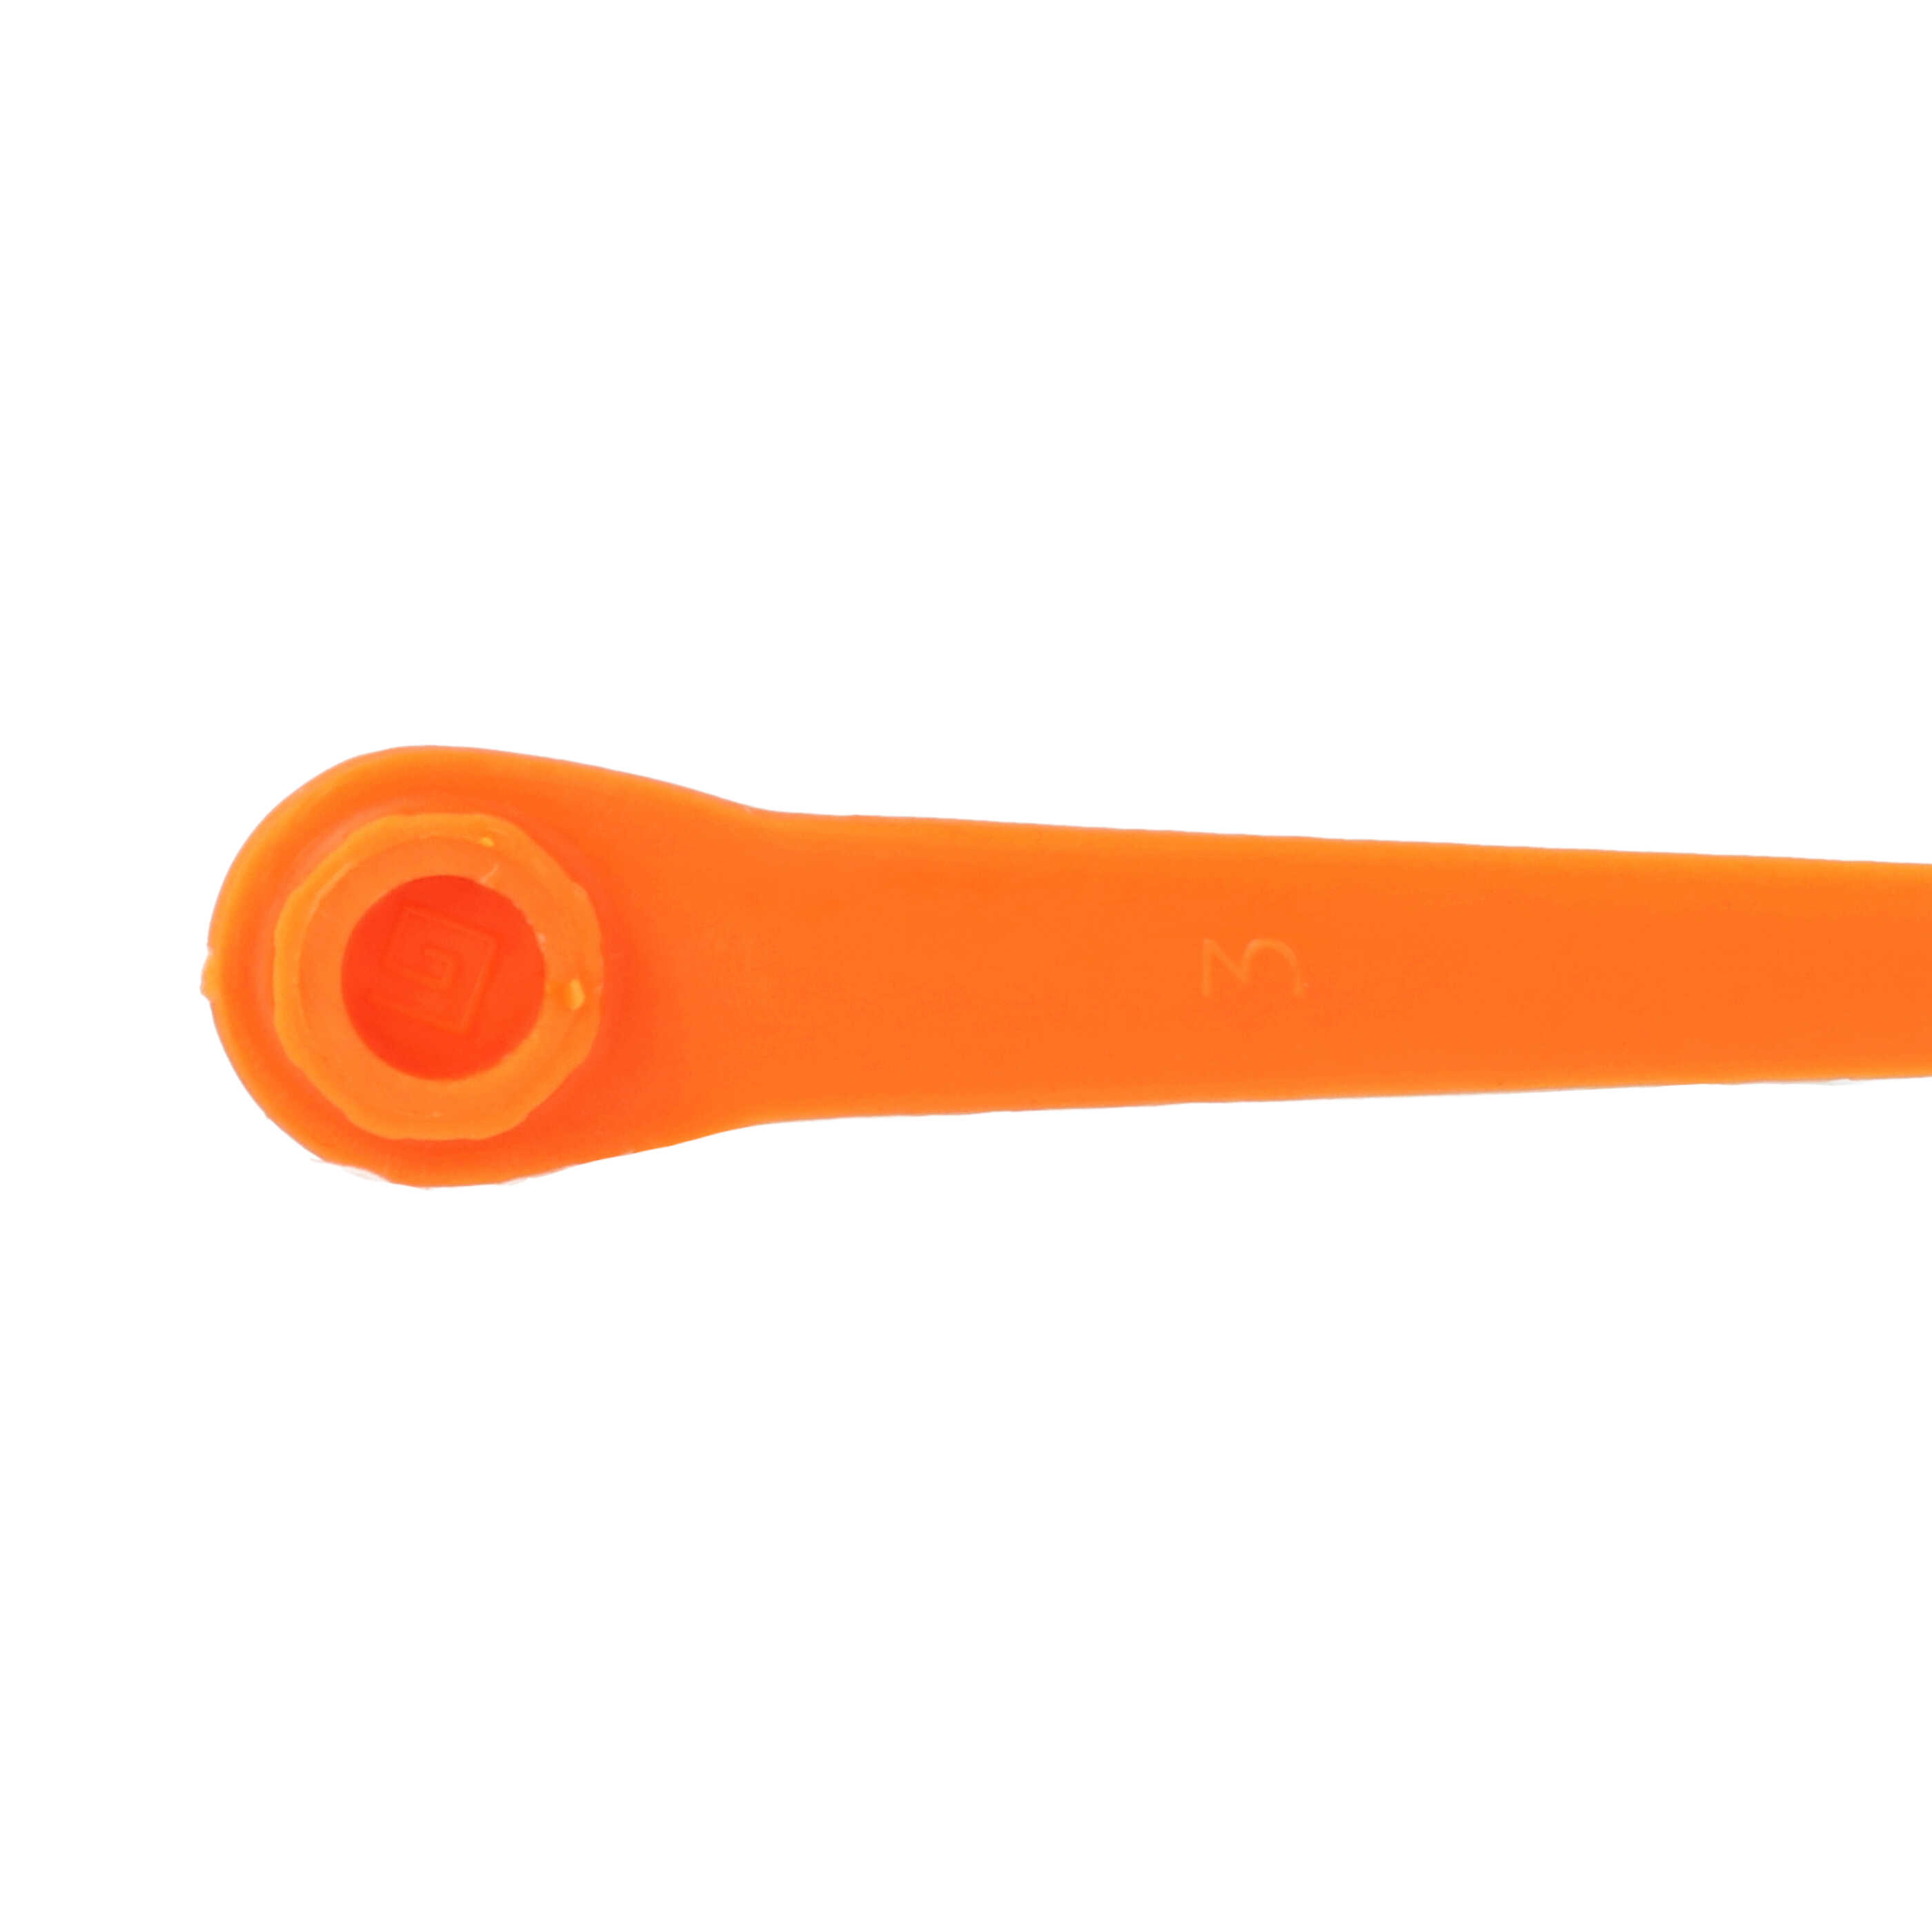 5x Exchange Blade replaces Gardena RotorCut 5368-20 for Cordless Strimmer - plastic, orange